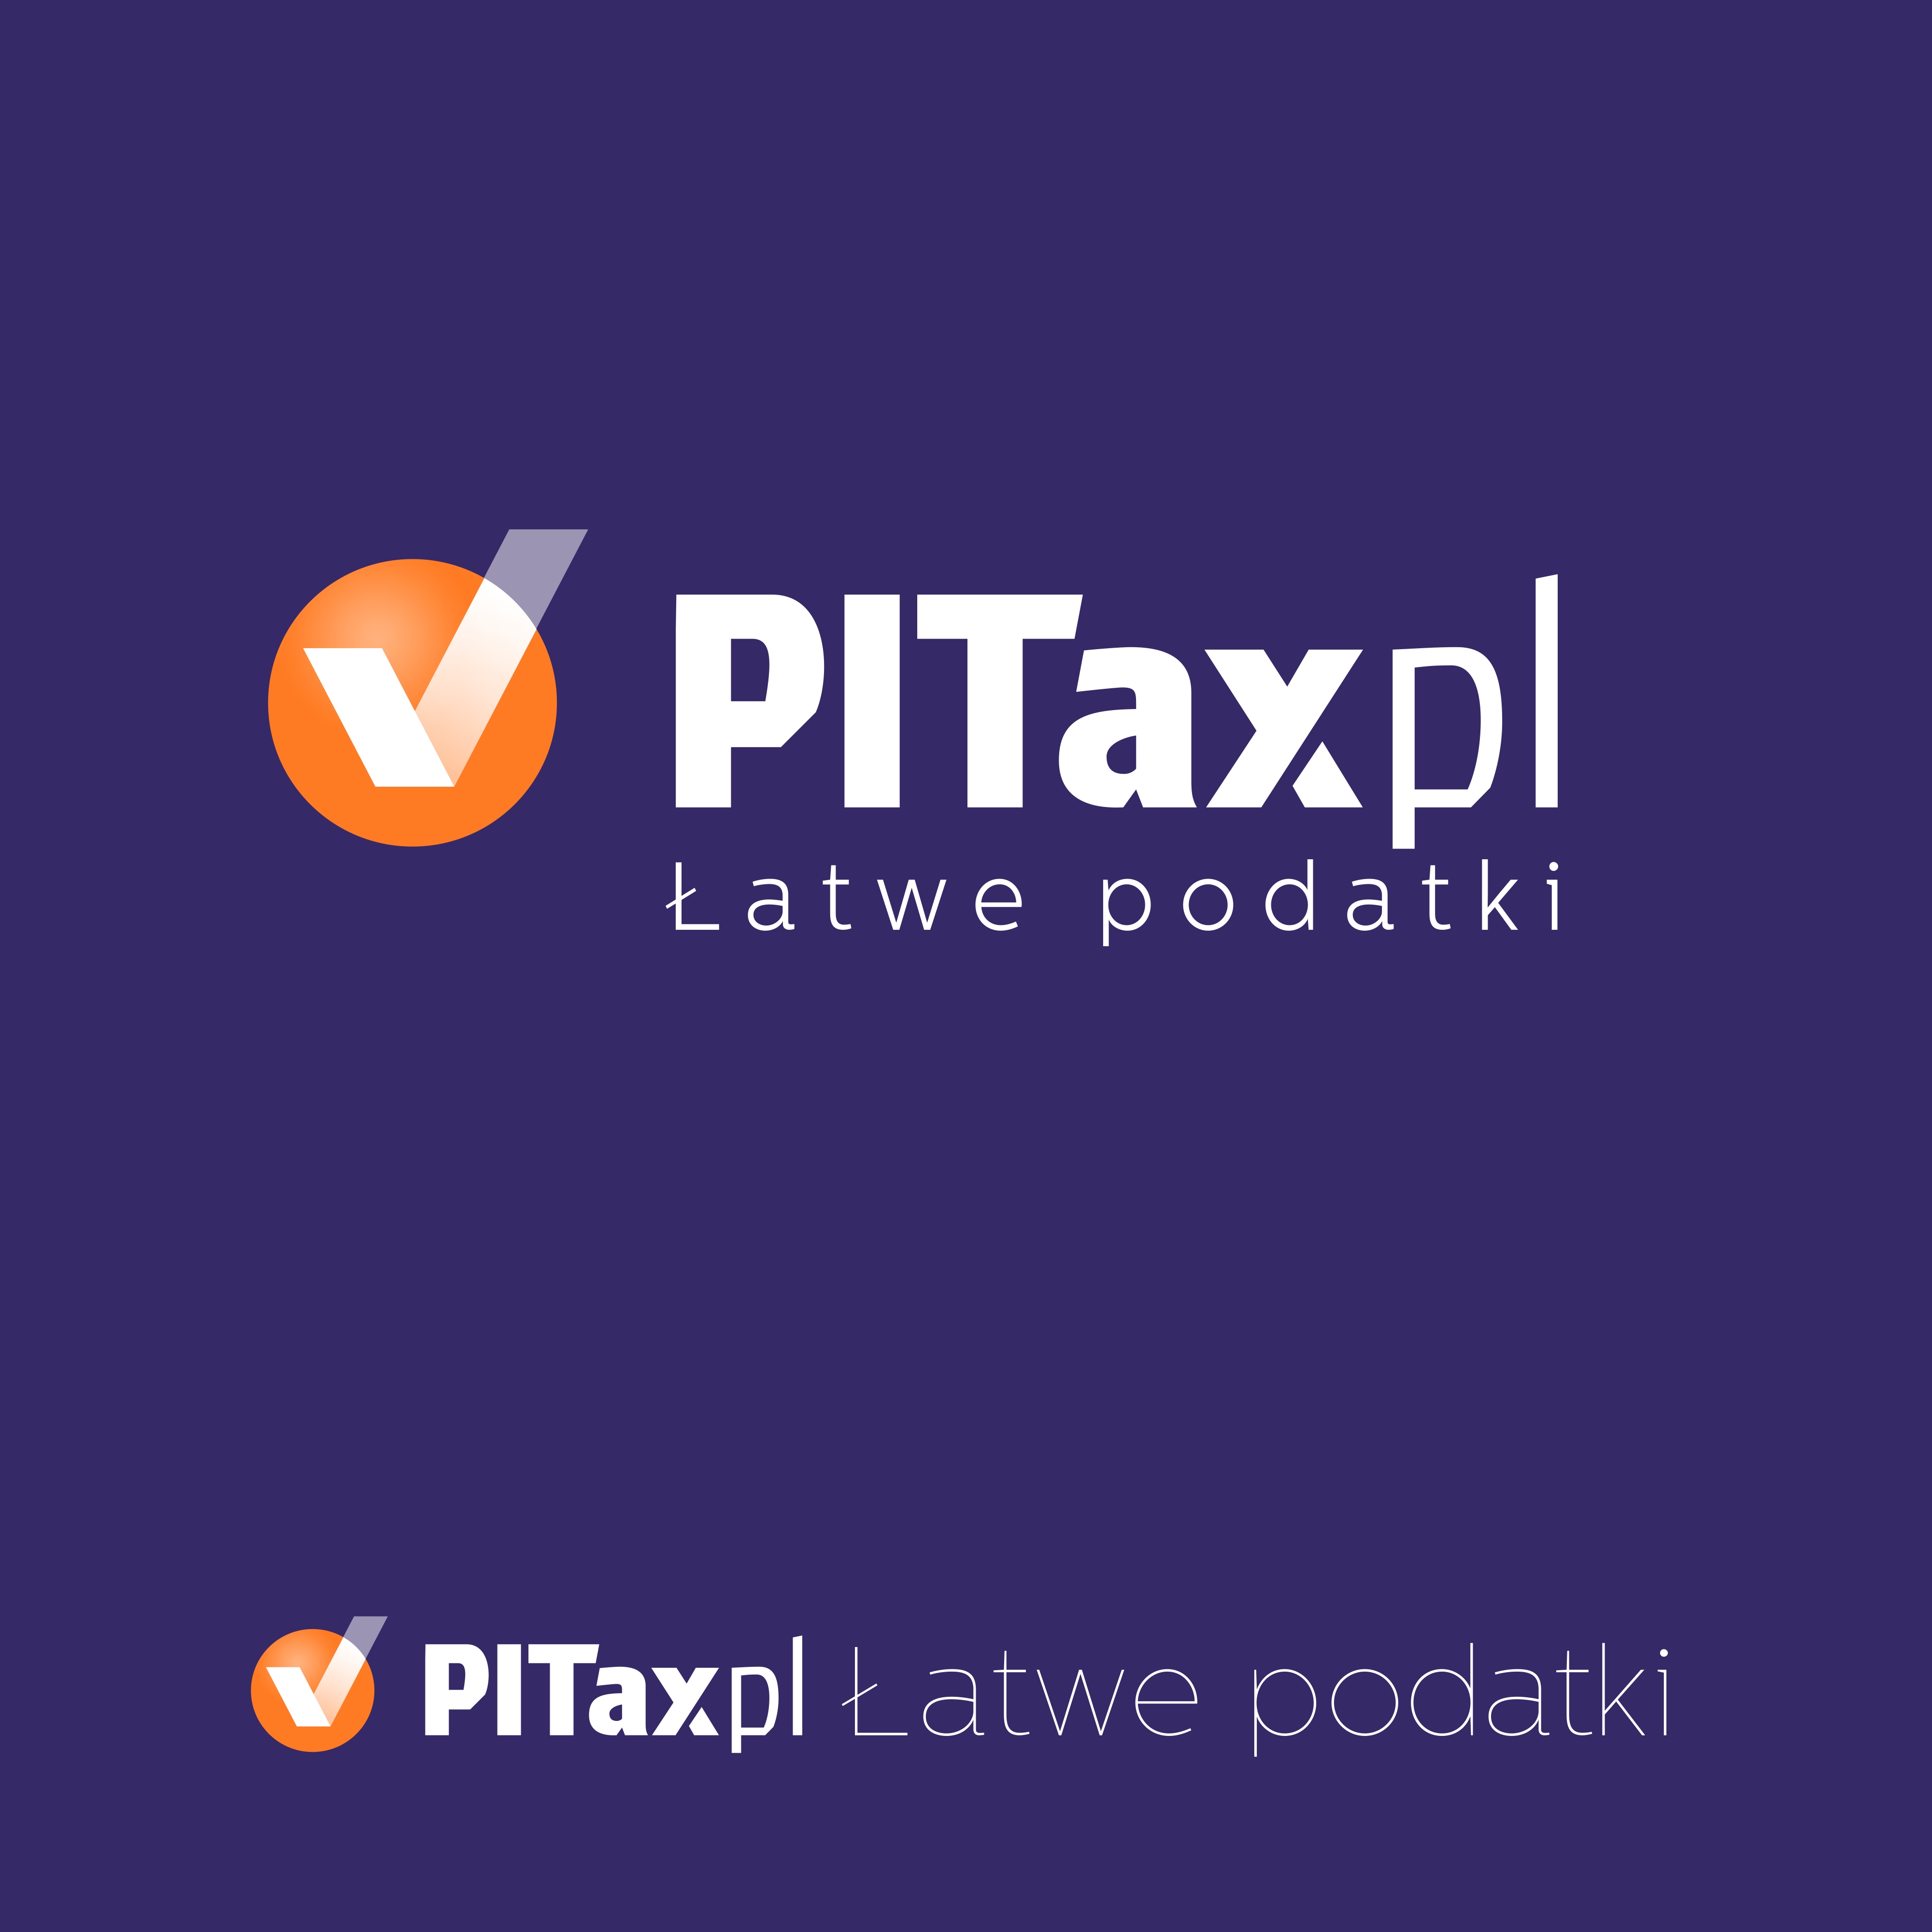 https://www.pitax.pl/assets/vi/pitax_logo_violet.jpg